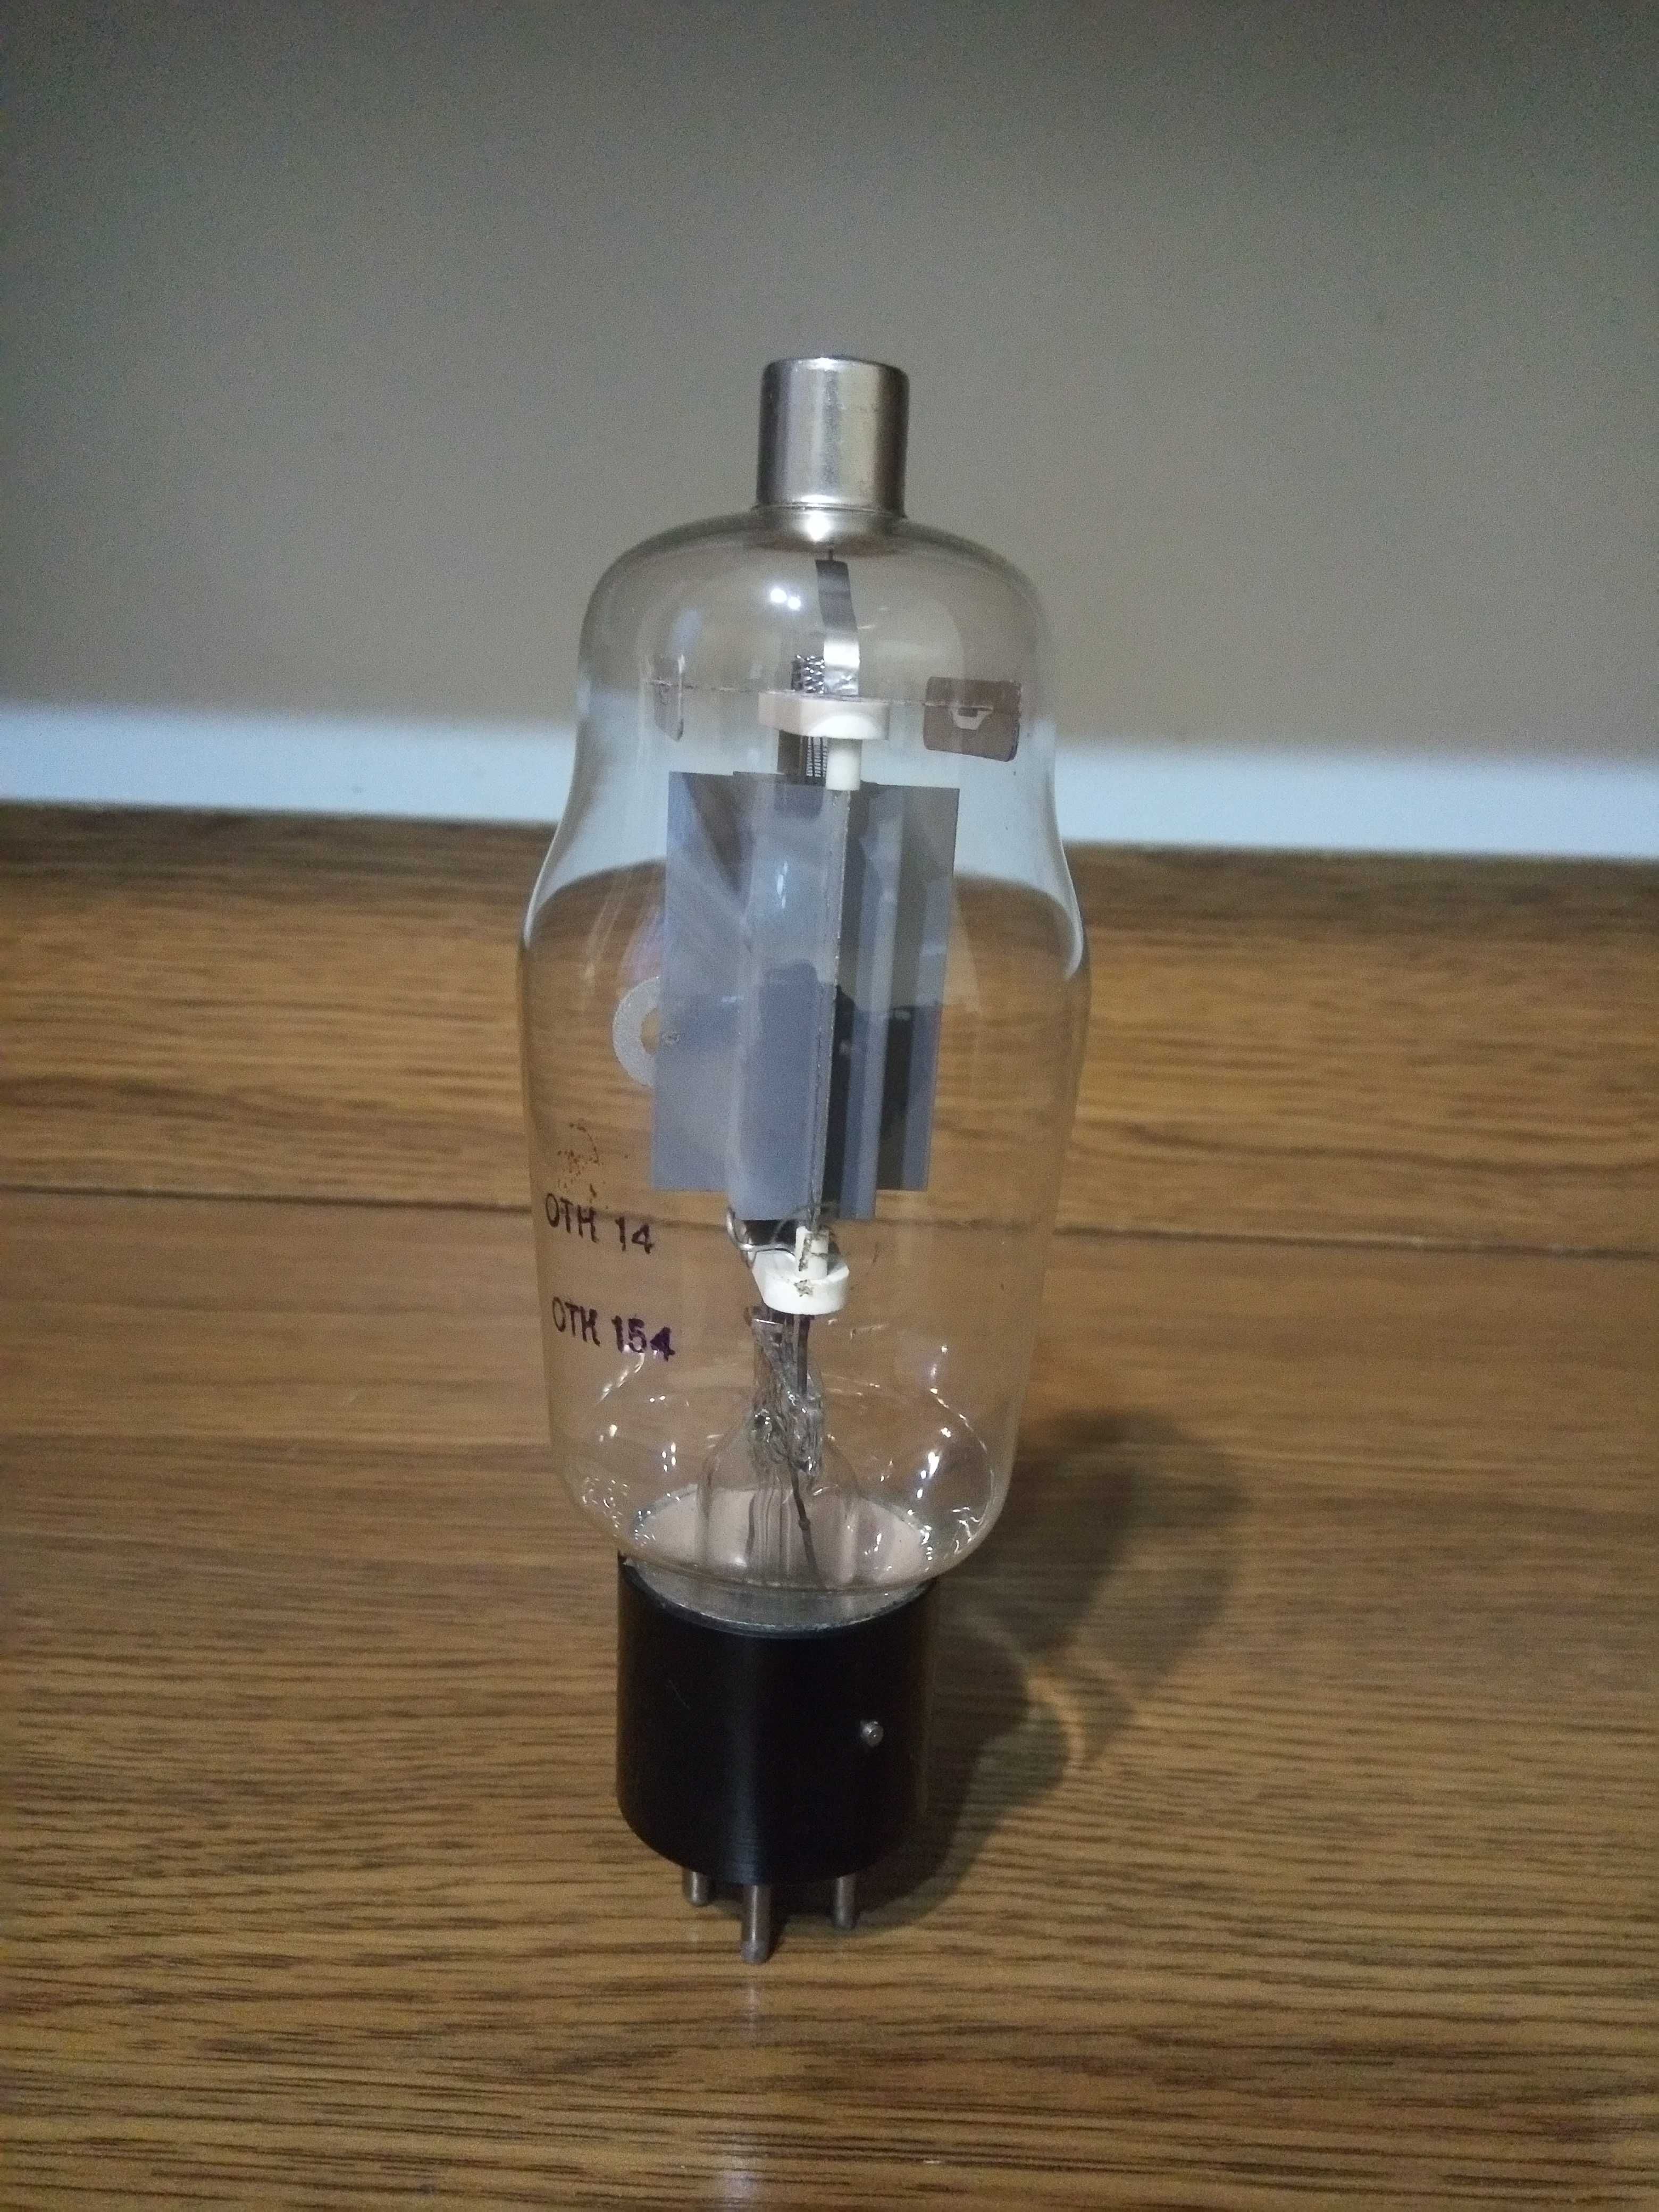 Лампа усилитьльная Г-811